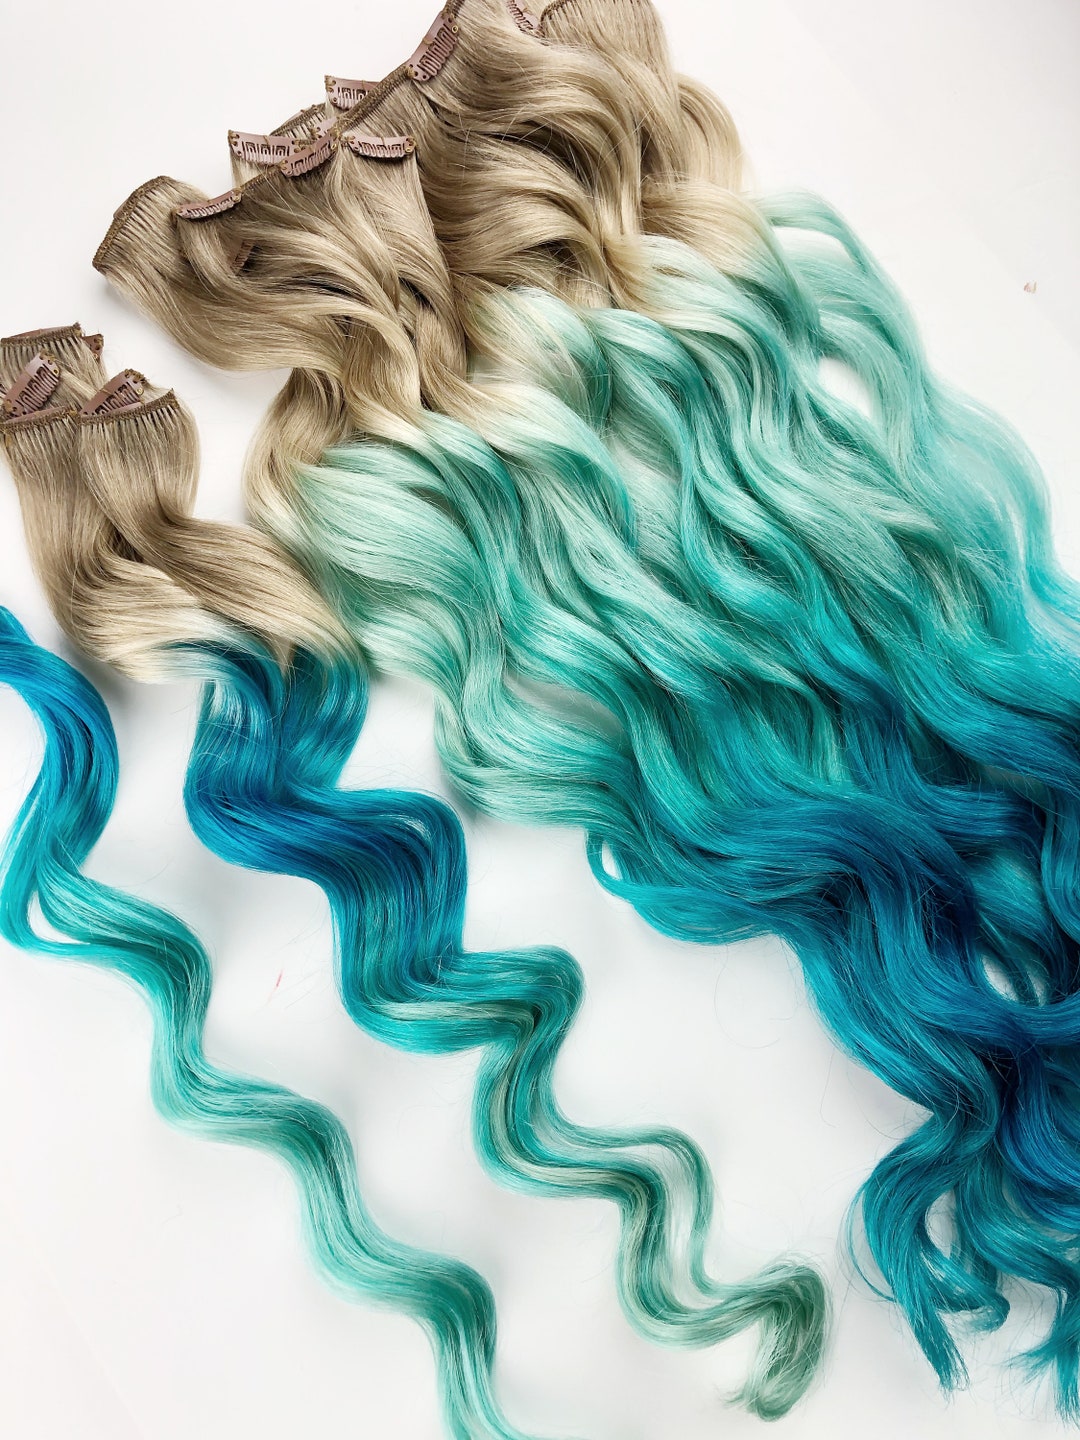 Pop & Release Tool – DreamCatchers Hair Extensions